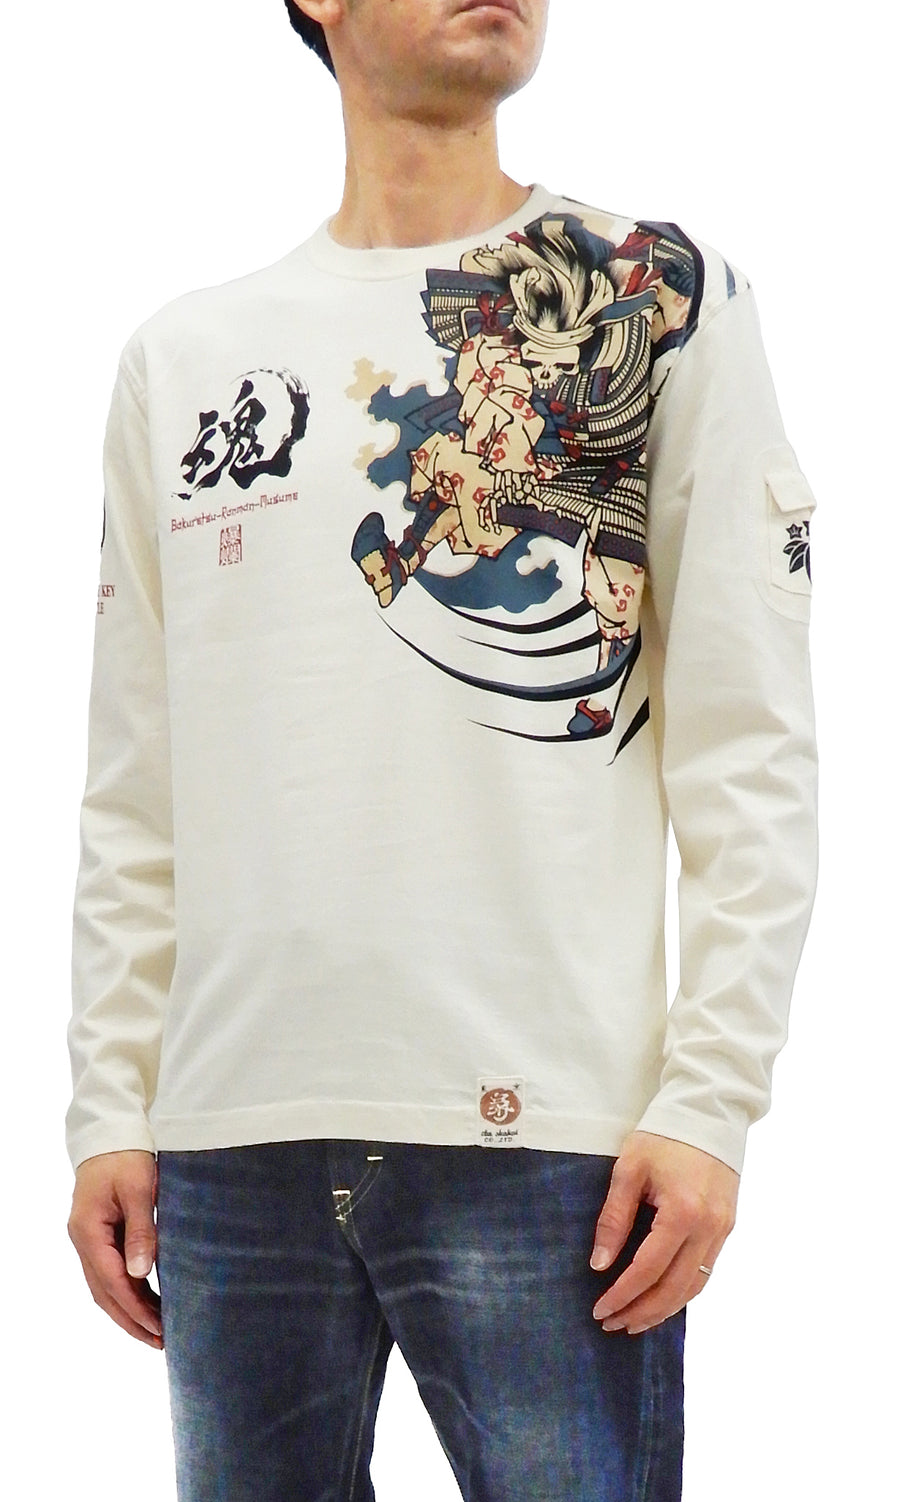 B-R-M T-Shirt Men's Japanese Samurai Art Graphic Long Sleeve Tee